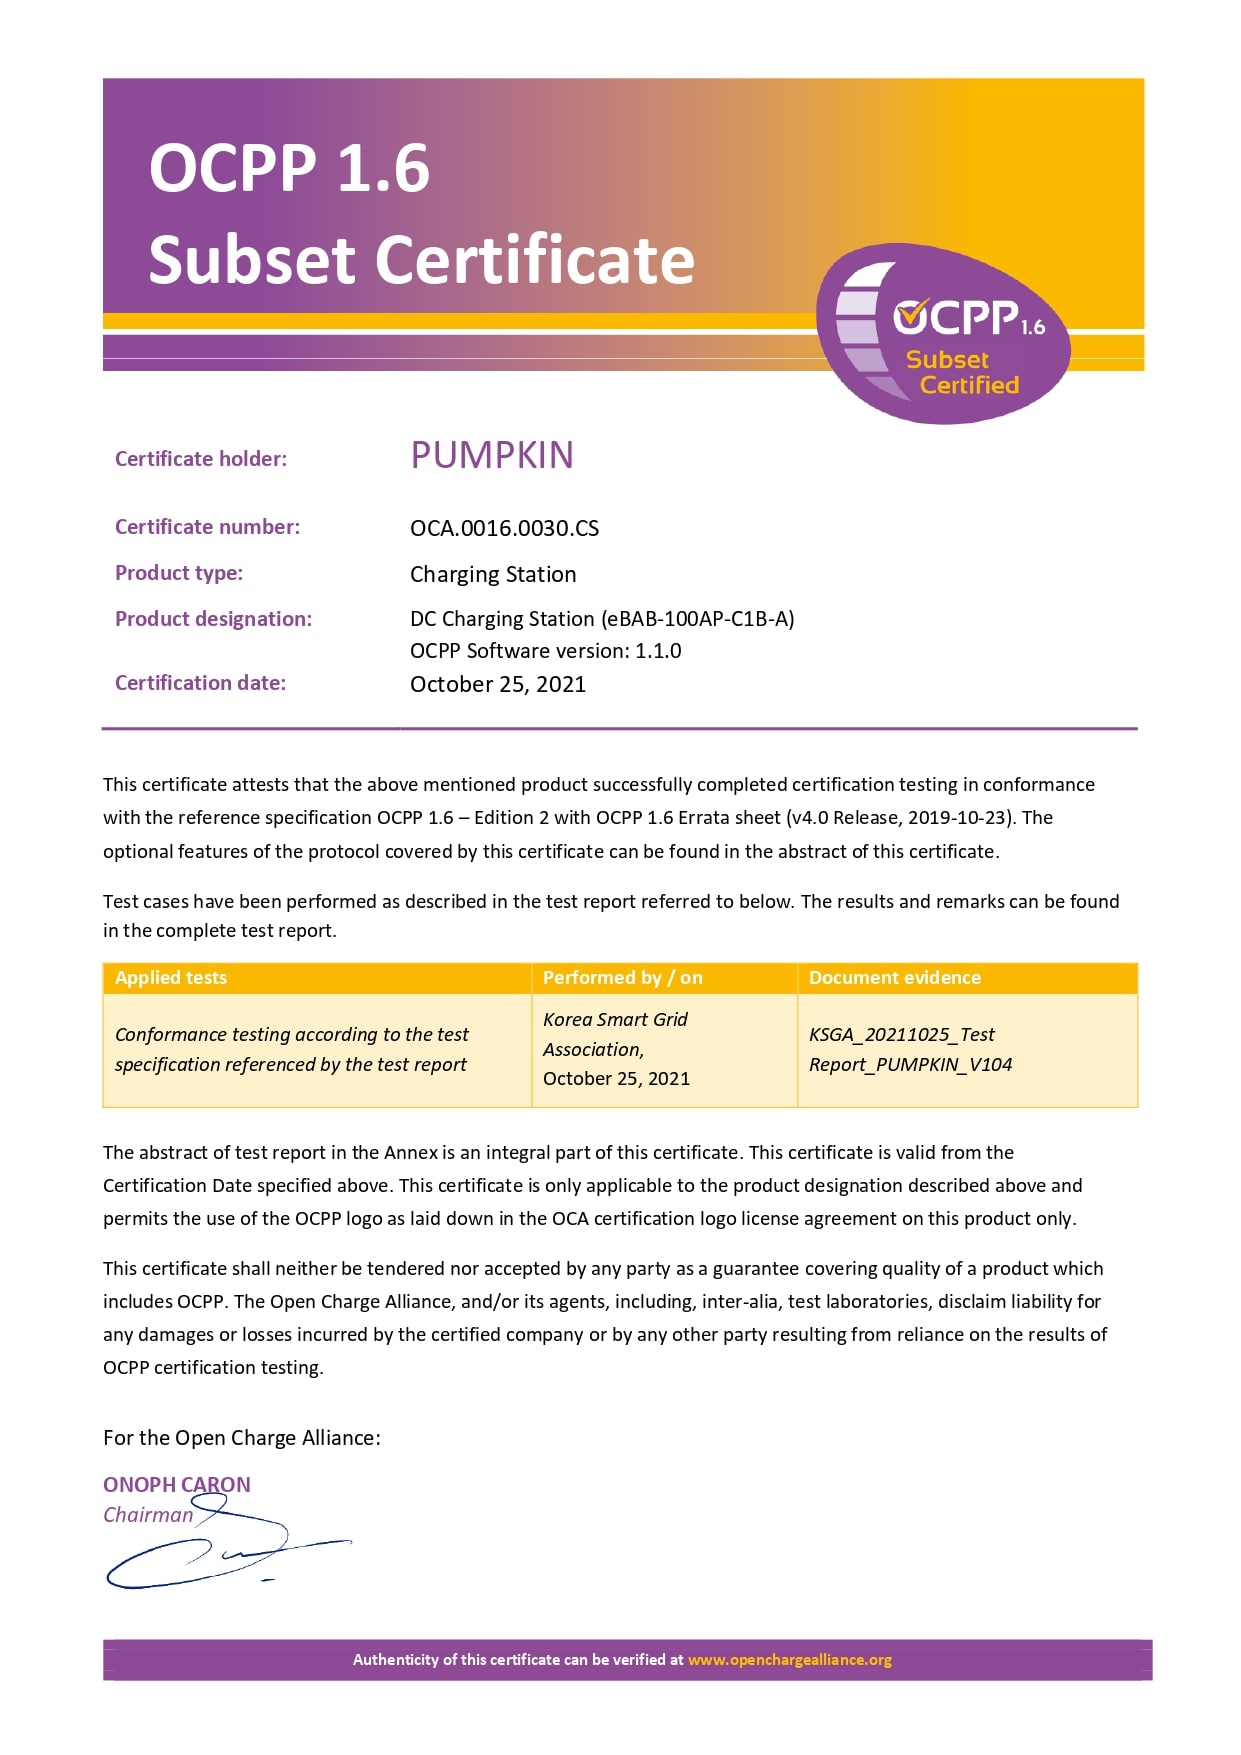 OCPP 1.6 Subset Certificate